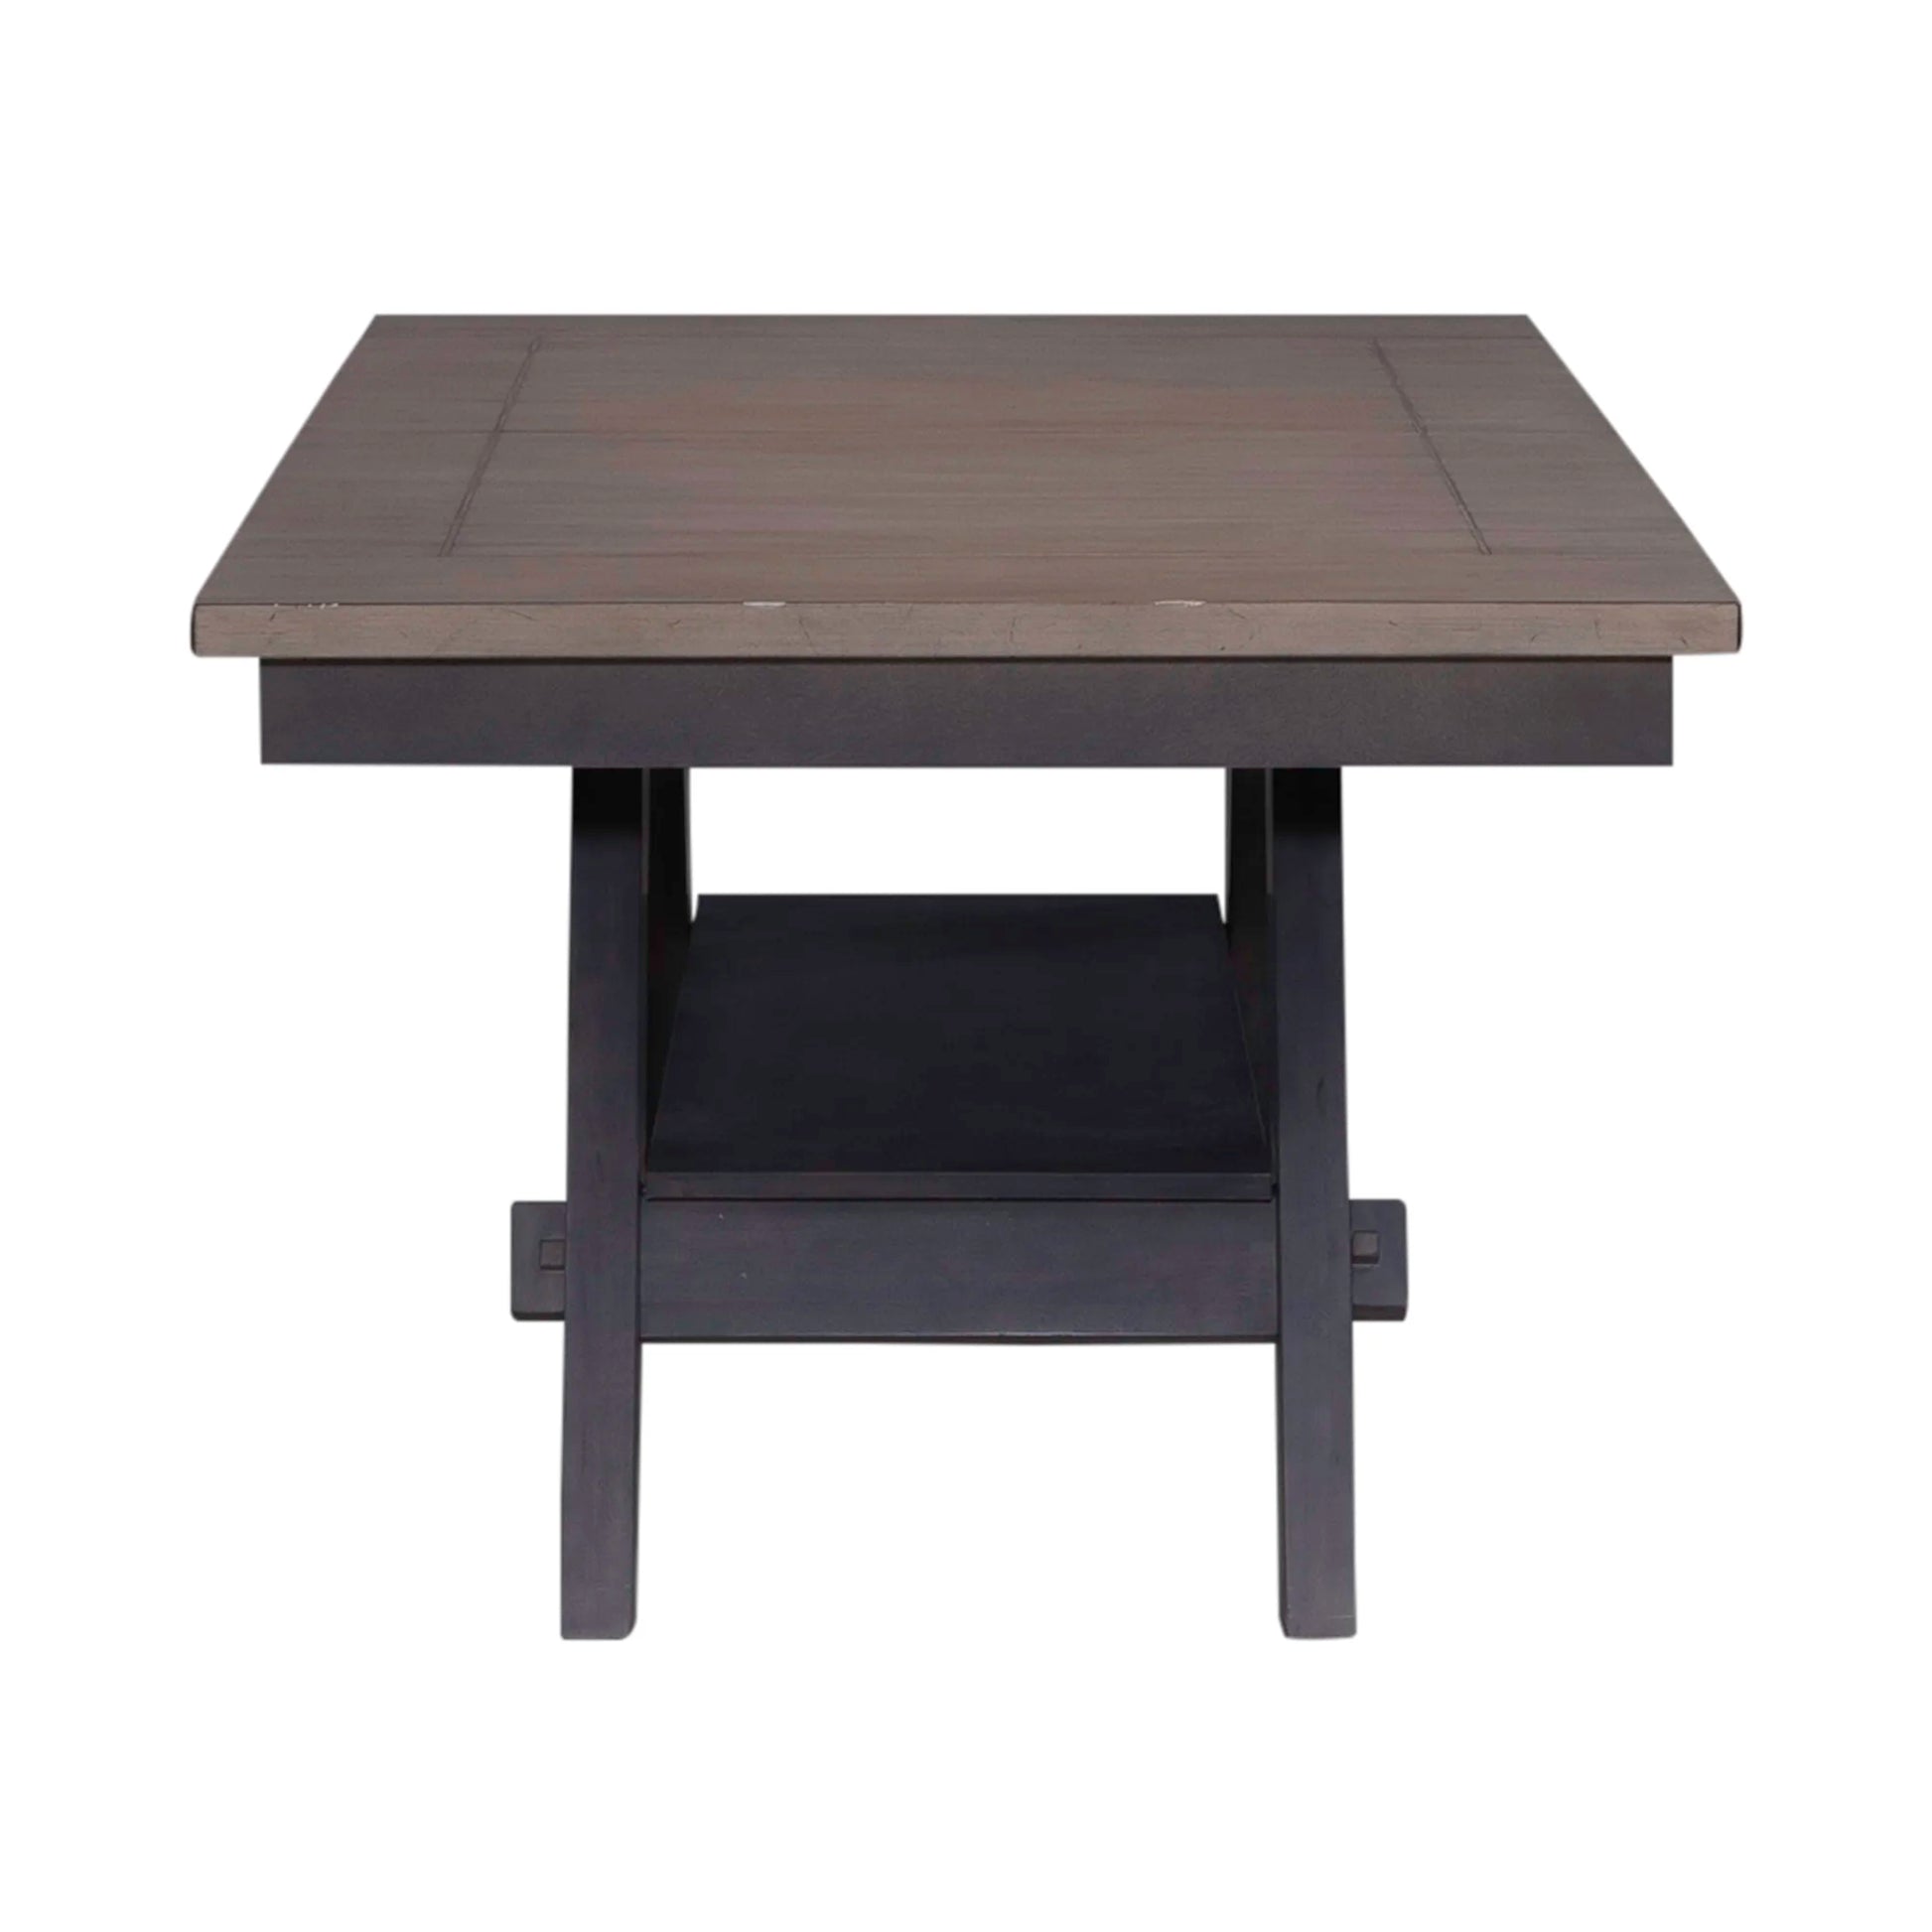 Lawson - Pedestal Table Set - Dark Gray 2